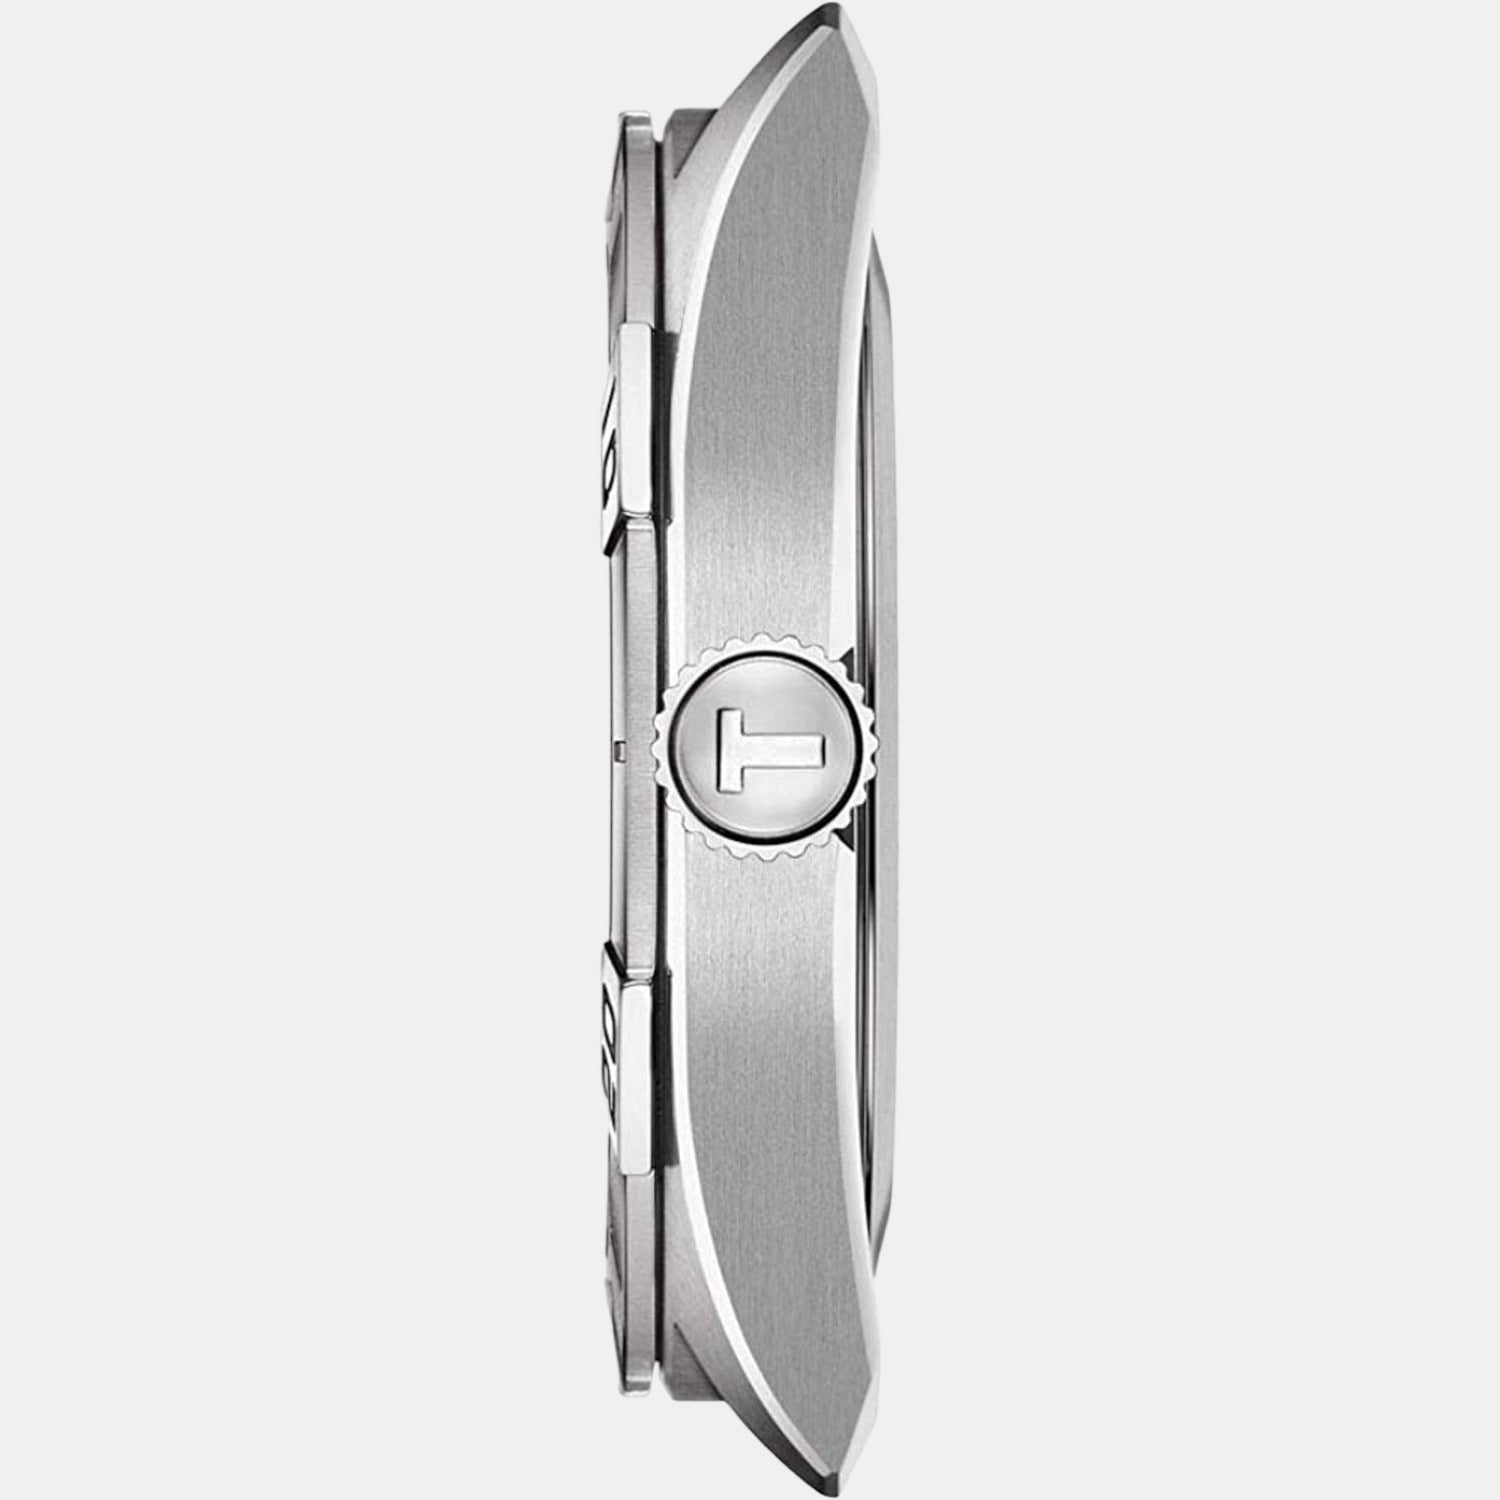 tissot-stainless-steel-silver-analog-men-watch-t1016101603100